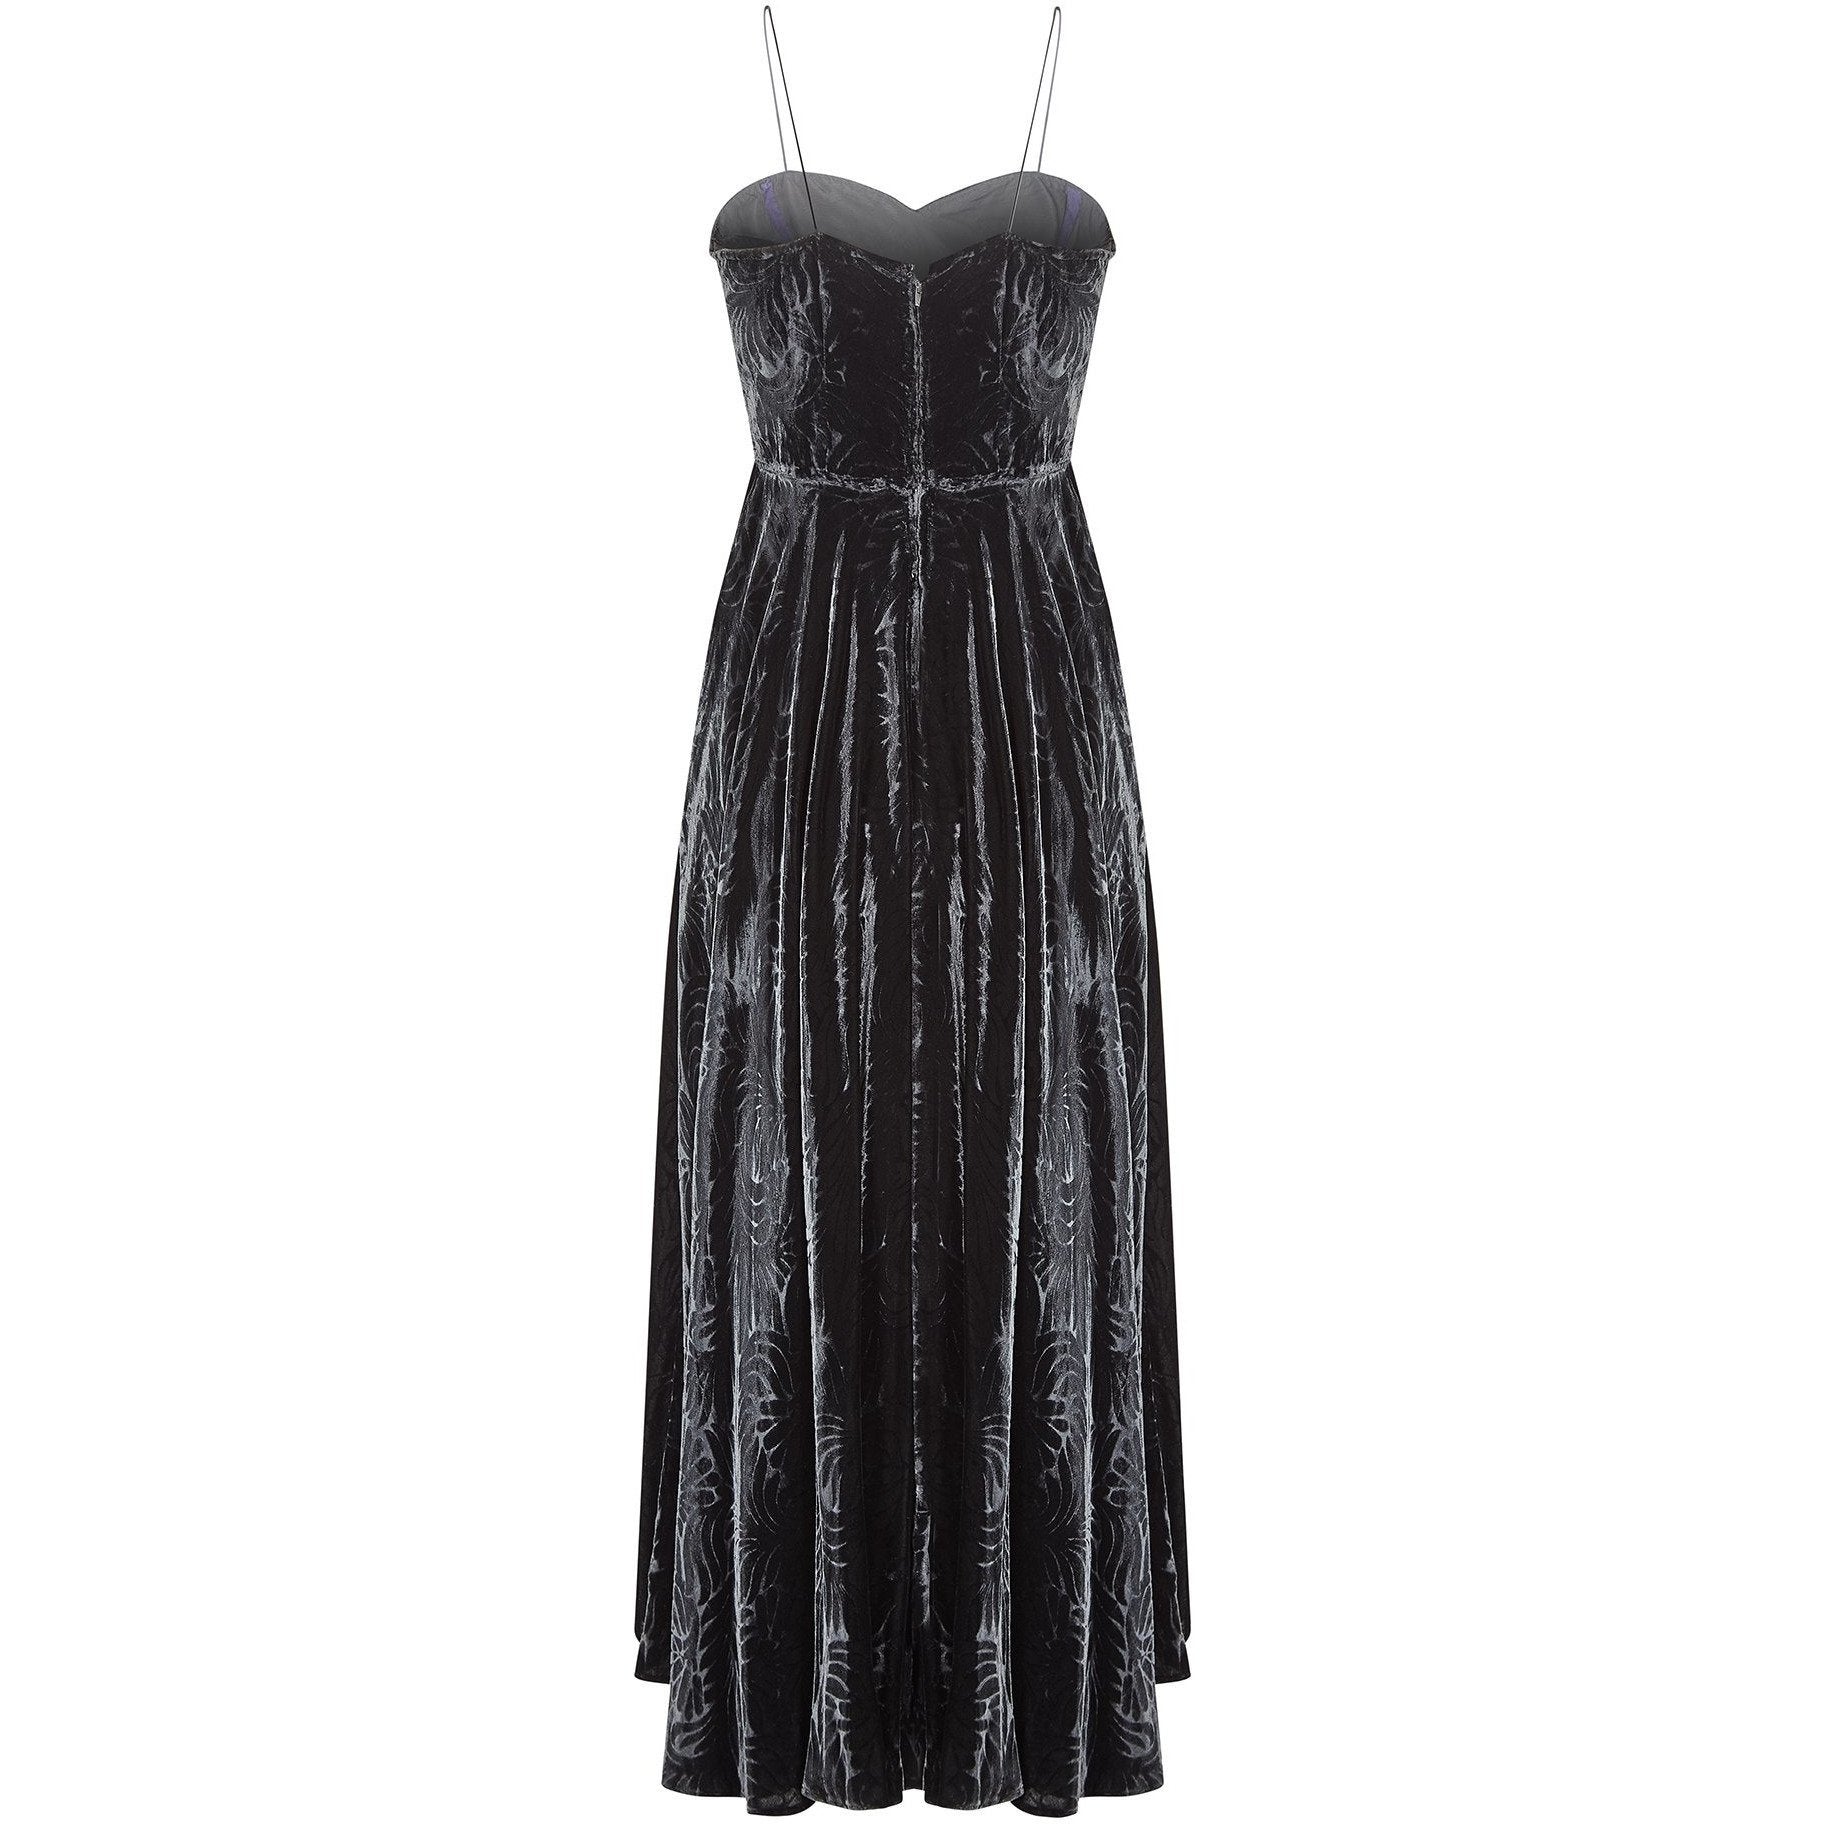 1930s Black Velvet Art Deco Floral Print Evening Dress